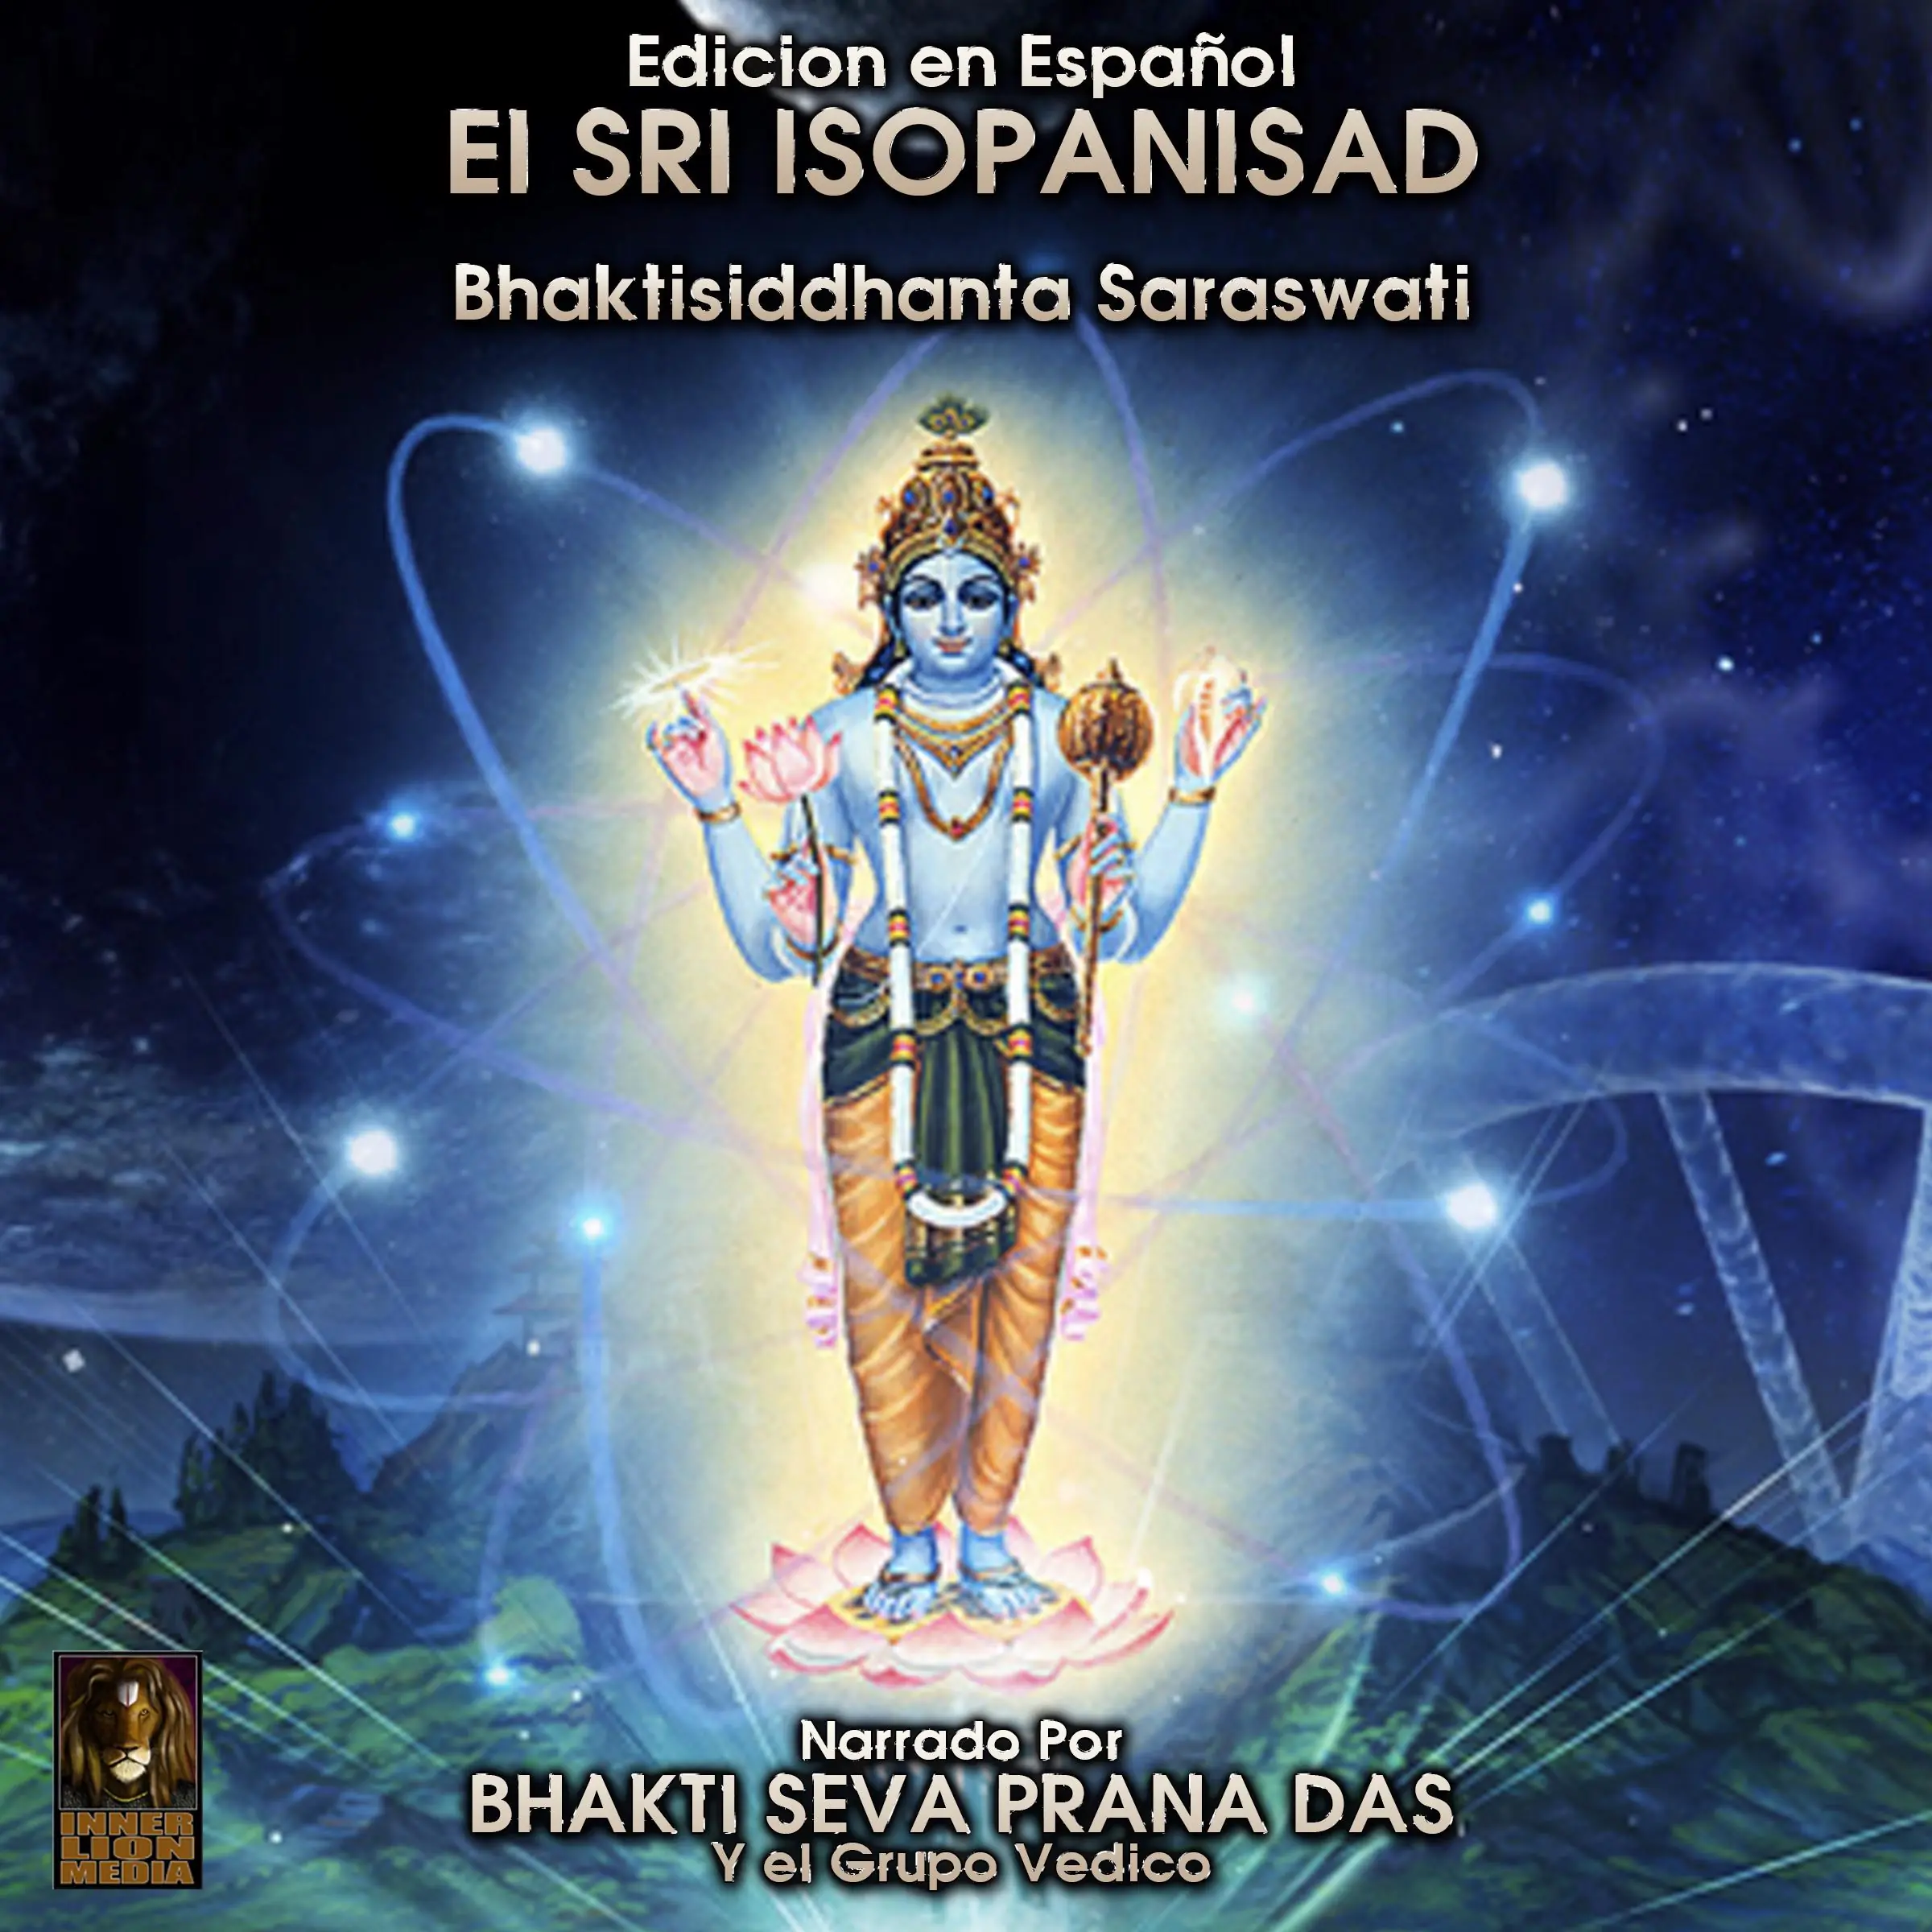 Edicion en Espanol El Sri Isopanisad Audiobook by Bhaktisiddhanta Saraswati